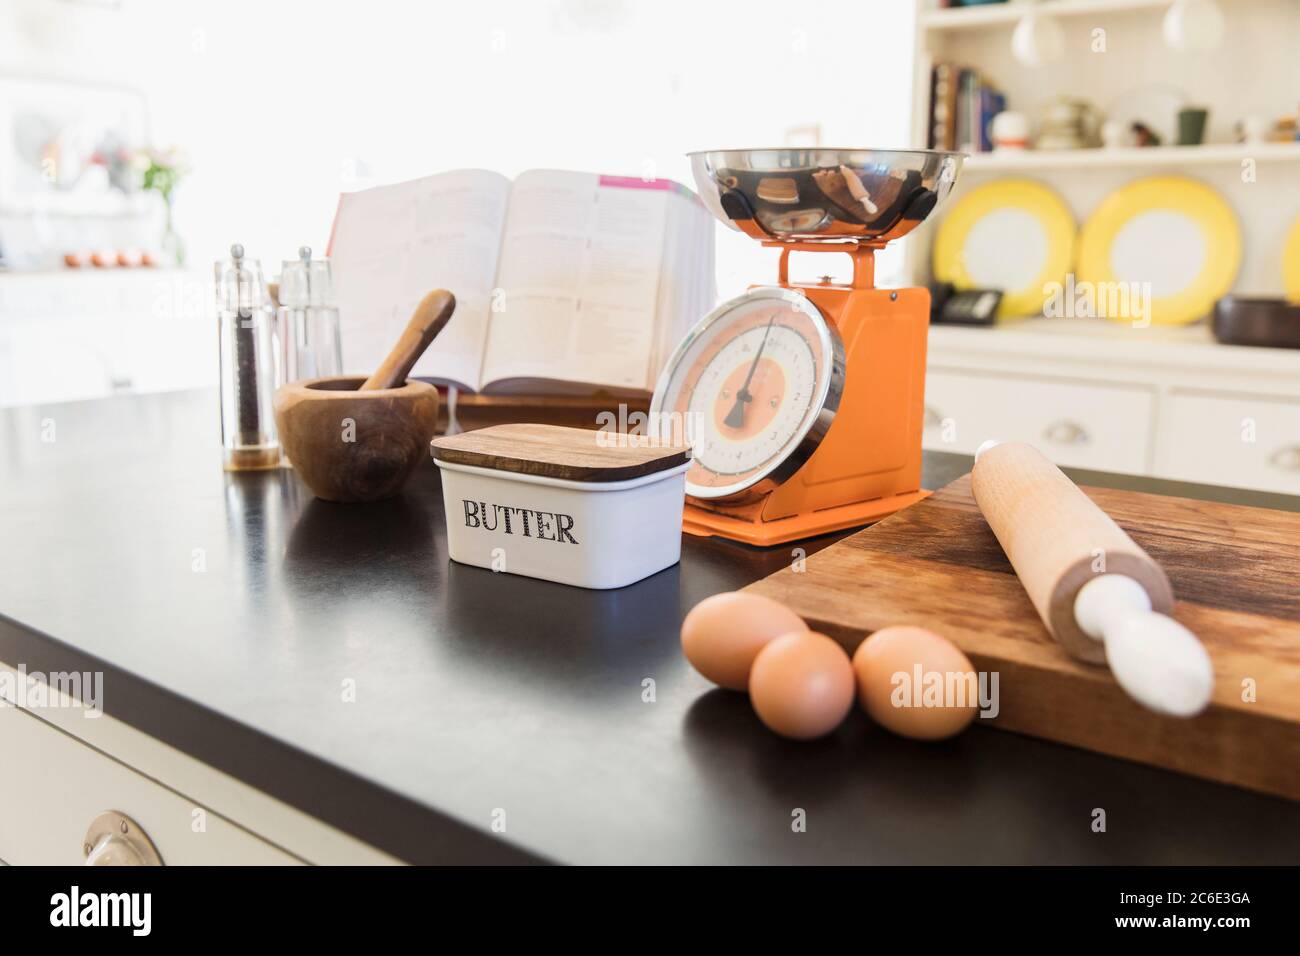 Baking ingredients on kitchen counter Stock Photo